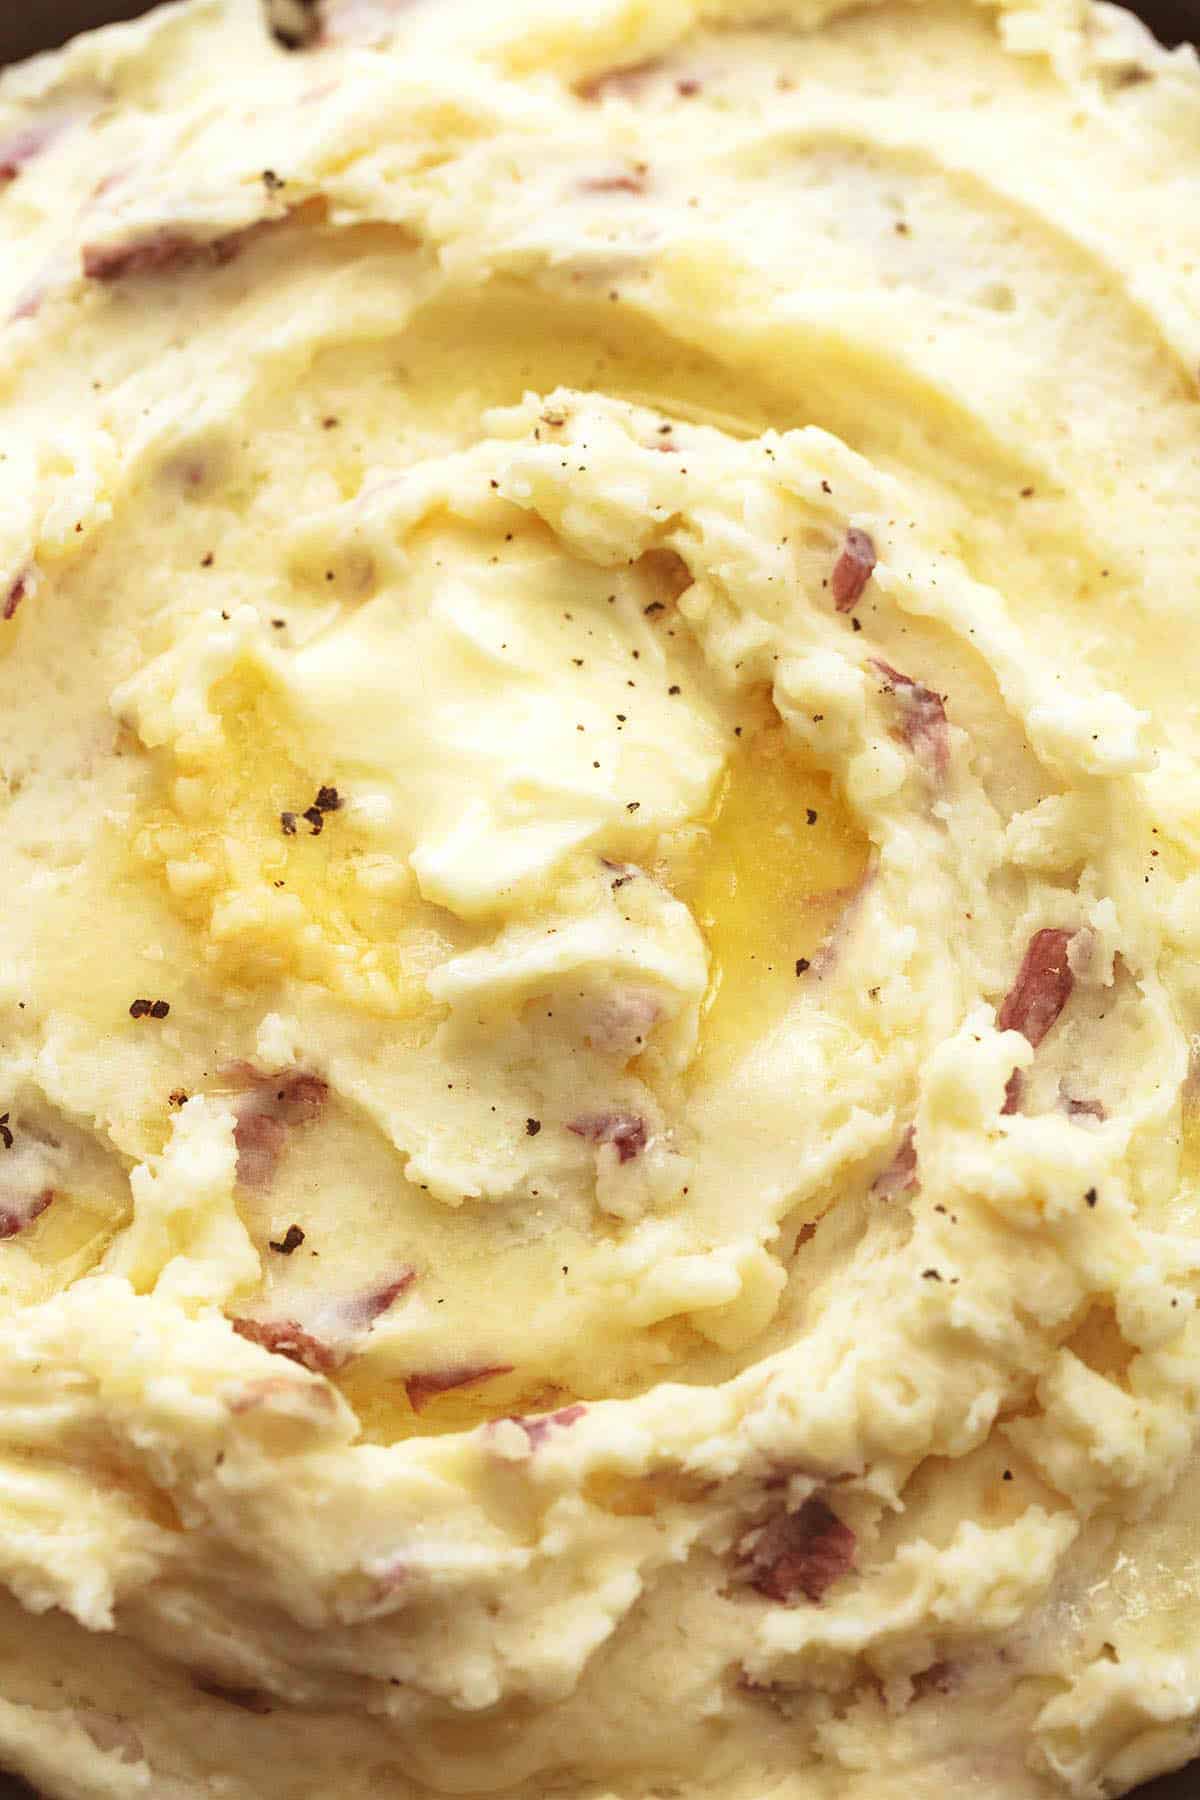 10 ways to dress up mashed potatoes